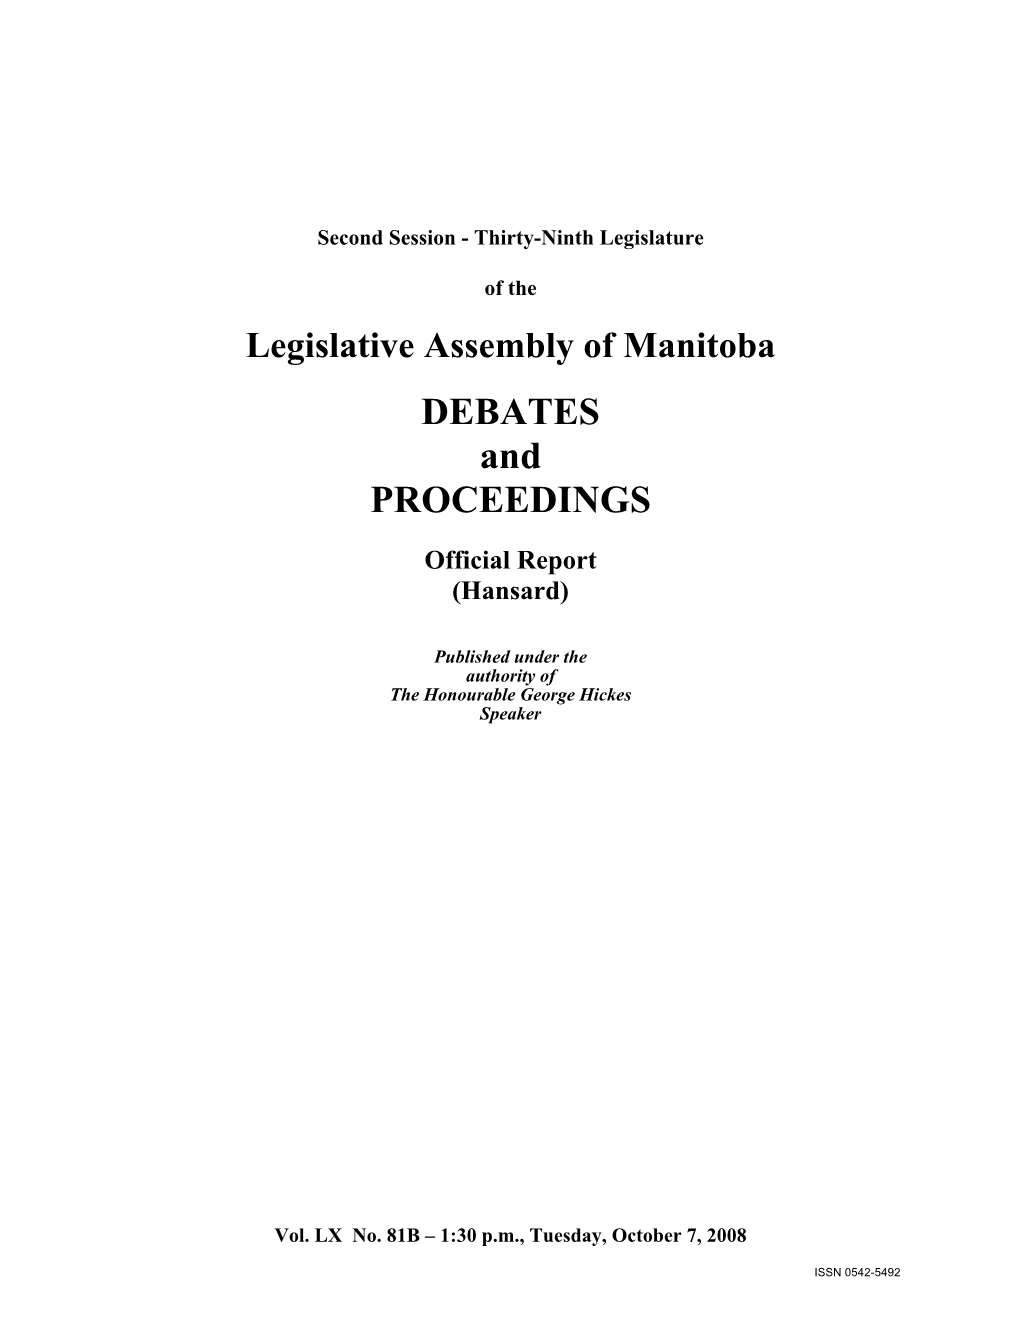 Thirty-Ninth Legislature, October 7, 2008